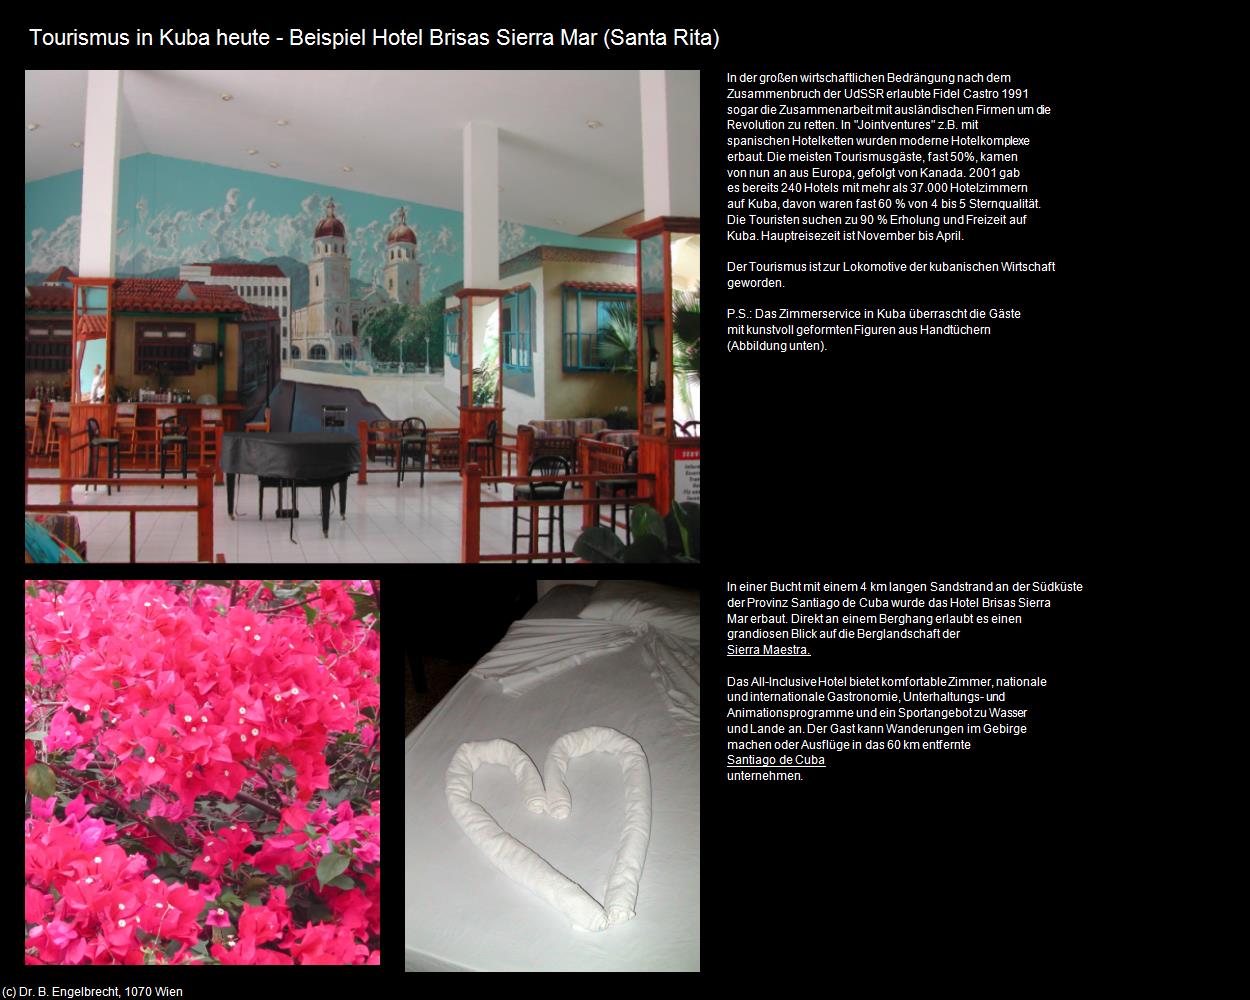 Tourismus heute-Hotel Brisas Sierra Mar (Santa Rita) in KUBA(c)B.Engelbrecht